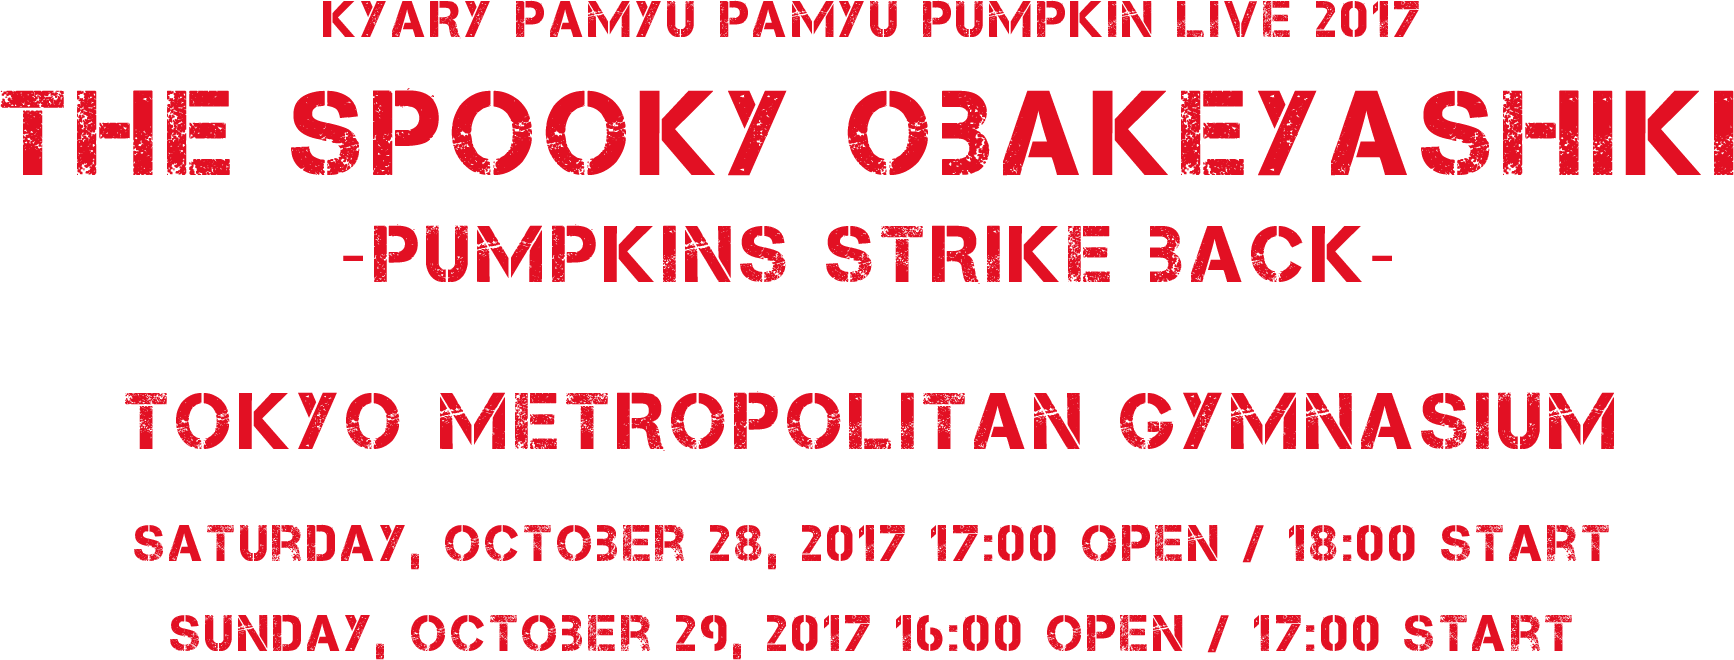 KYARY PAMYU PAMYU PUMPKIN LIVE 2017 THE SPOOKY OBAKEYASHIKI ~PUMPKINS STRIKE BACK~ TOKYO METROPOLITAN GYMNASIUM Saturday, October 28, 2017 17:00 Open / 18:00 Start Sunday, October 29, 2017 16:00 Open / 17:00 Start